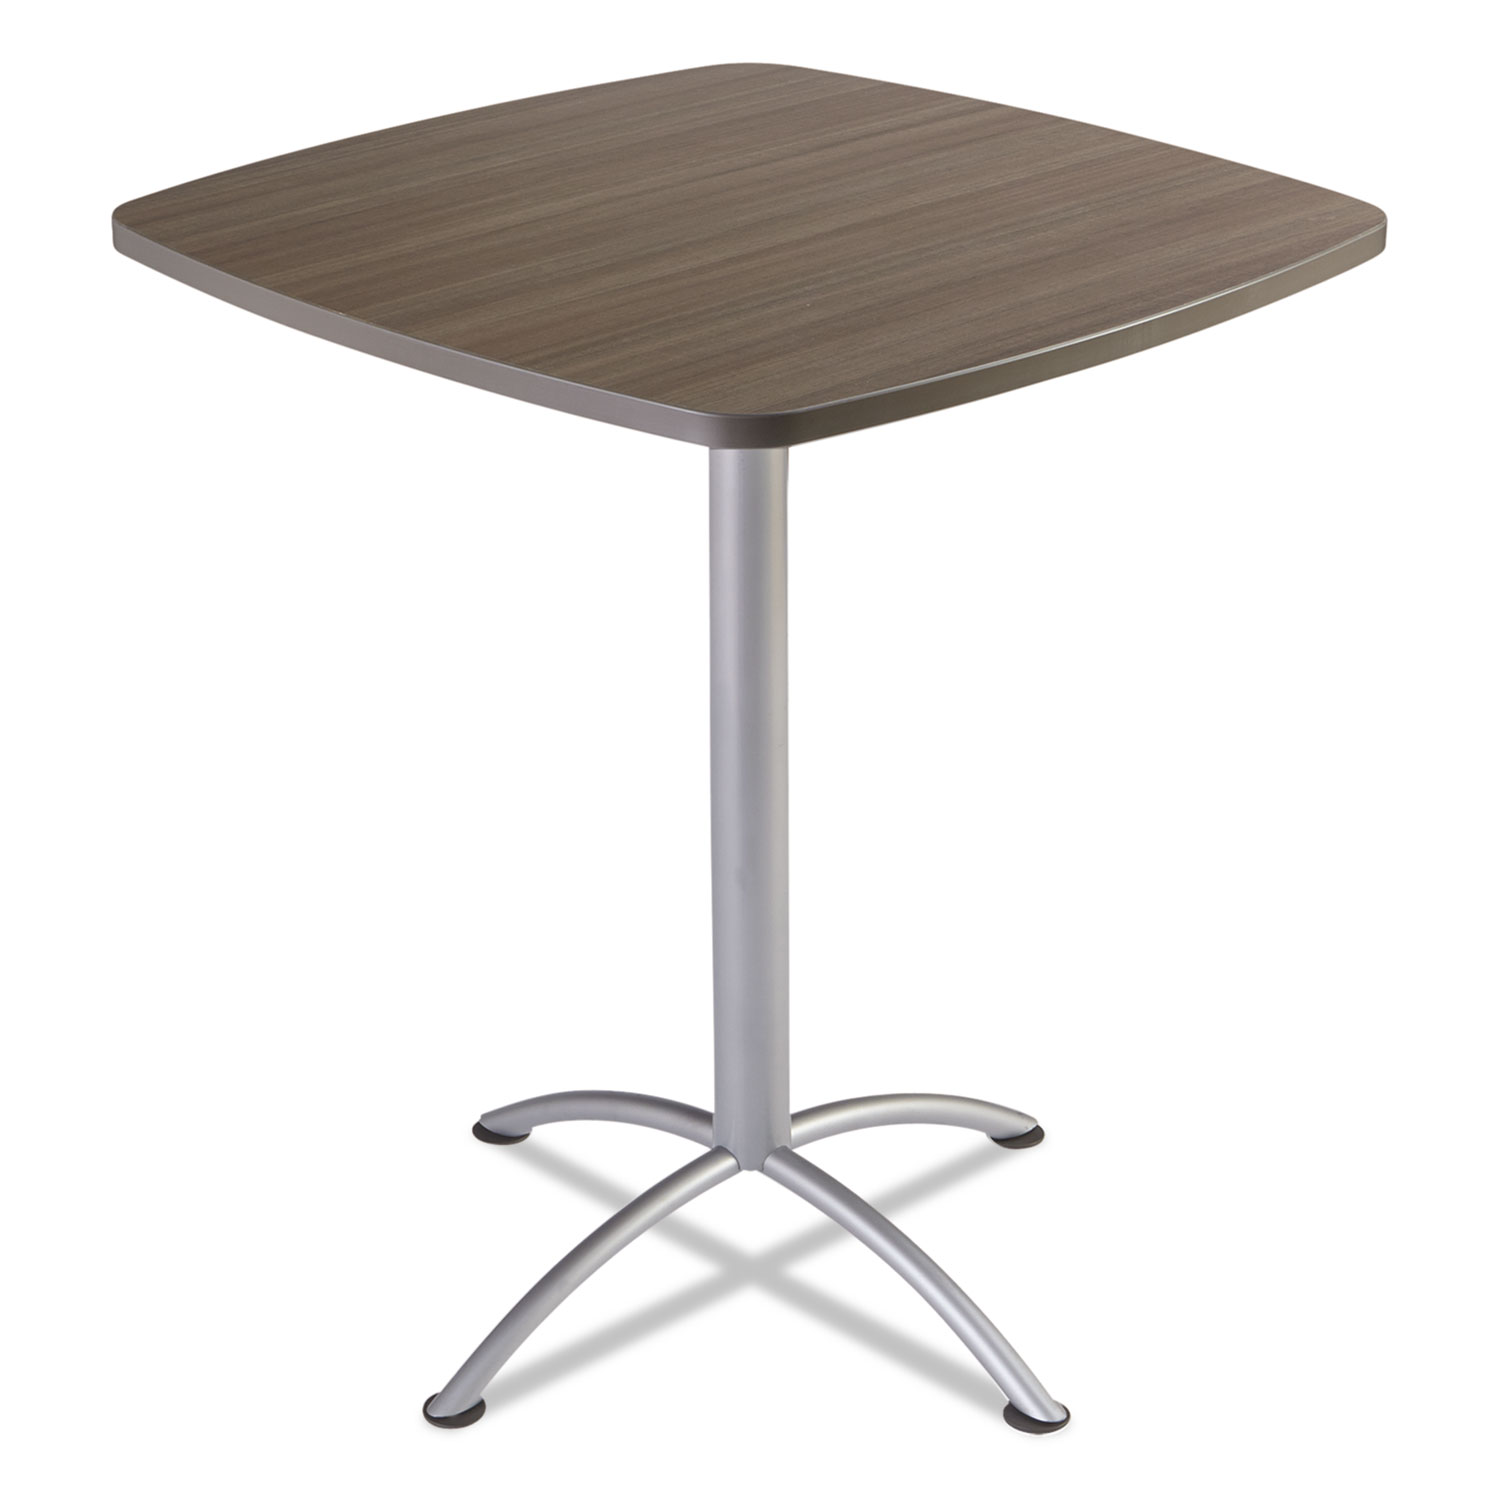 iLand Table, Contour, Square Seated Style, 42